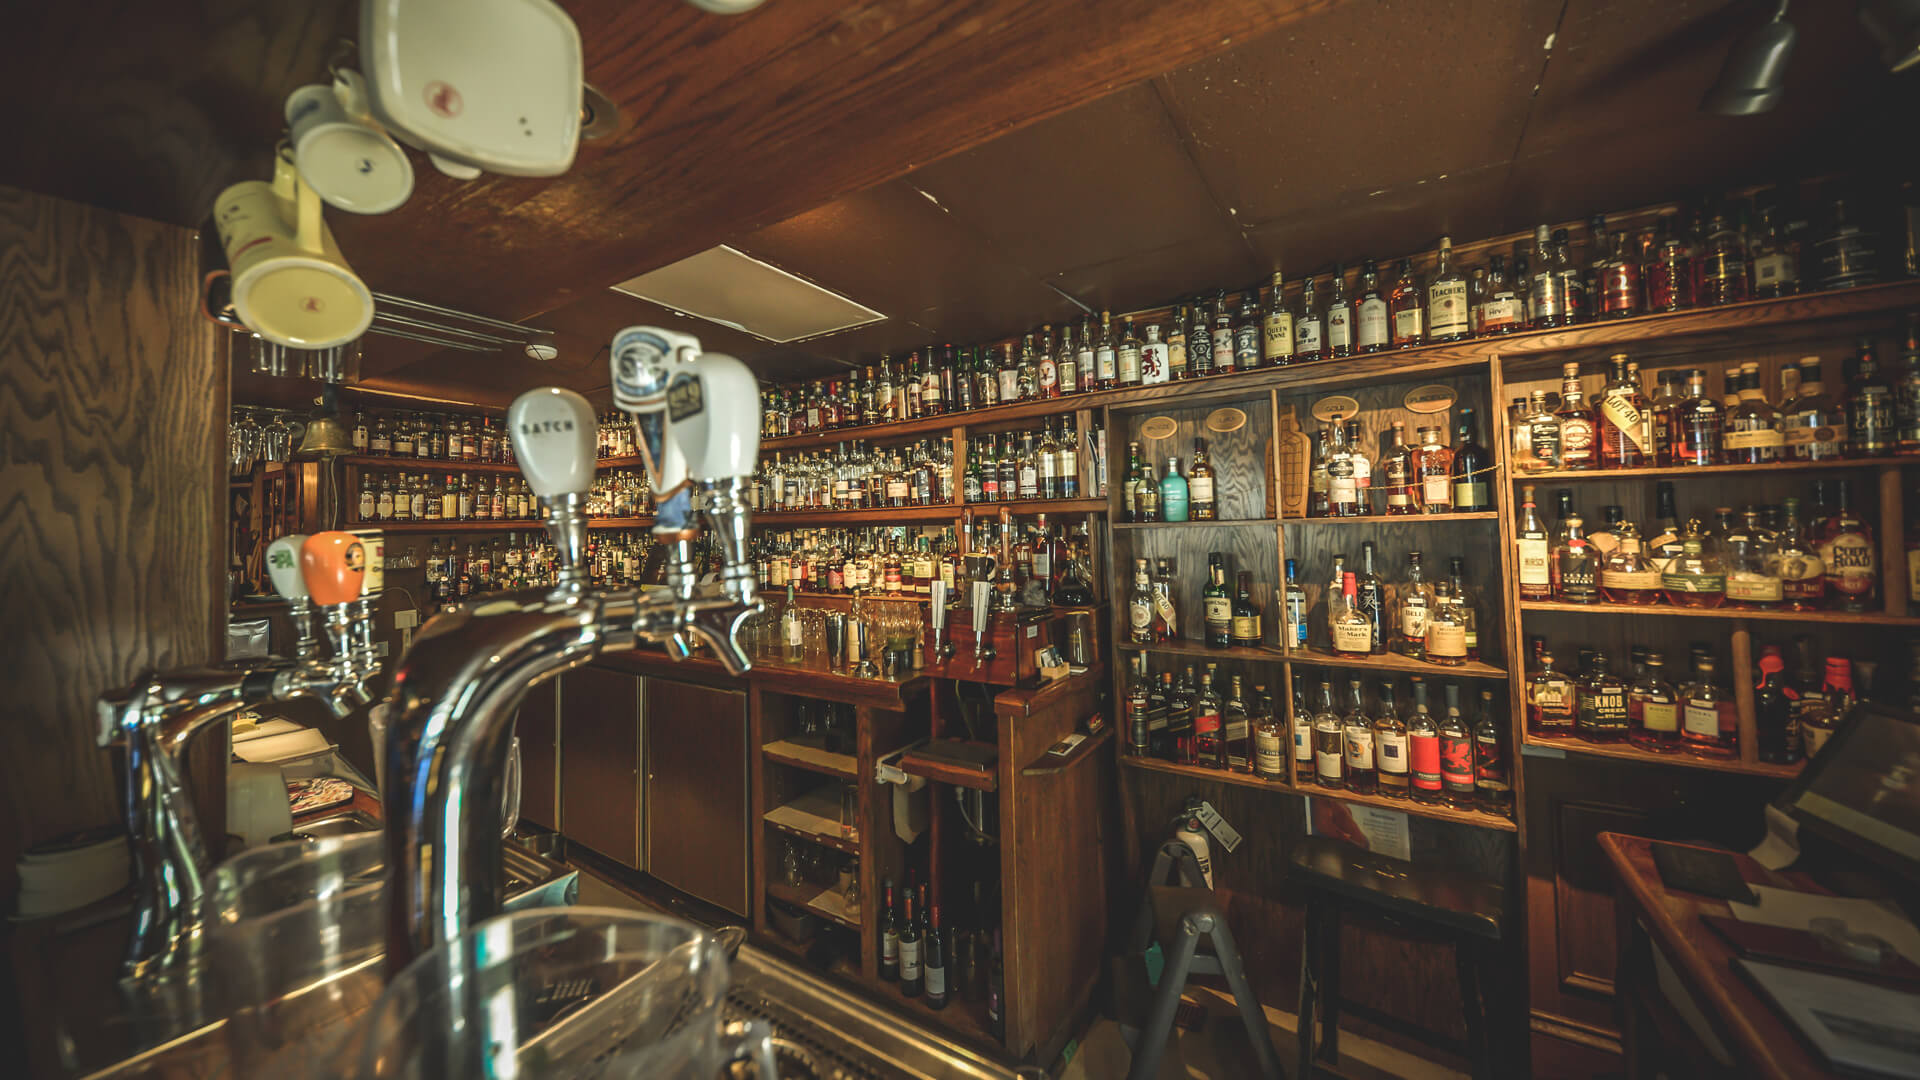 Image for a bar interior